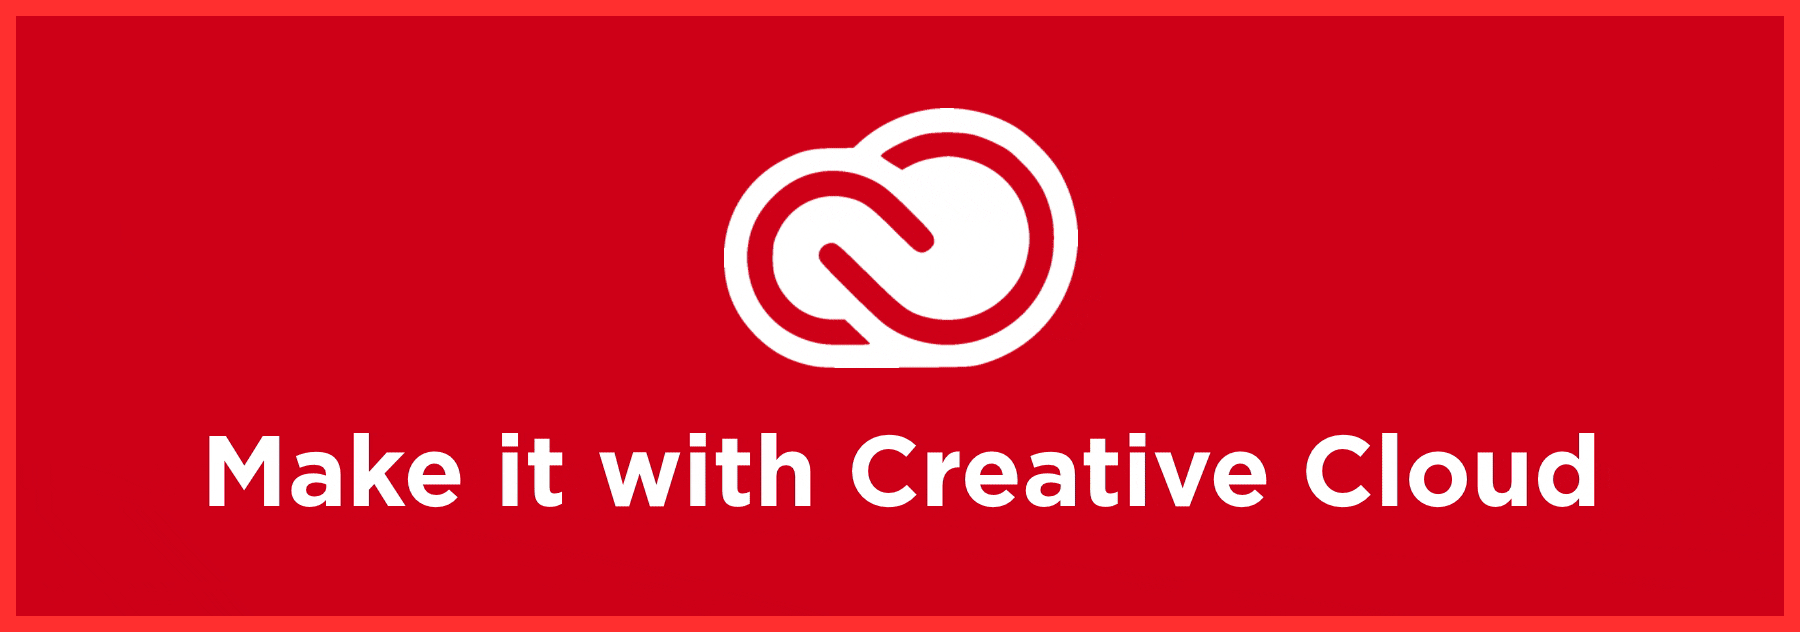 Adobe Creative Cloud License Agreement It Services Adobe Creative Cloud